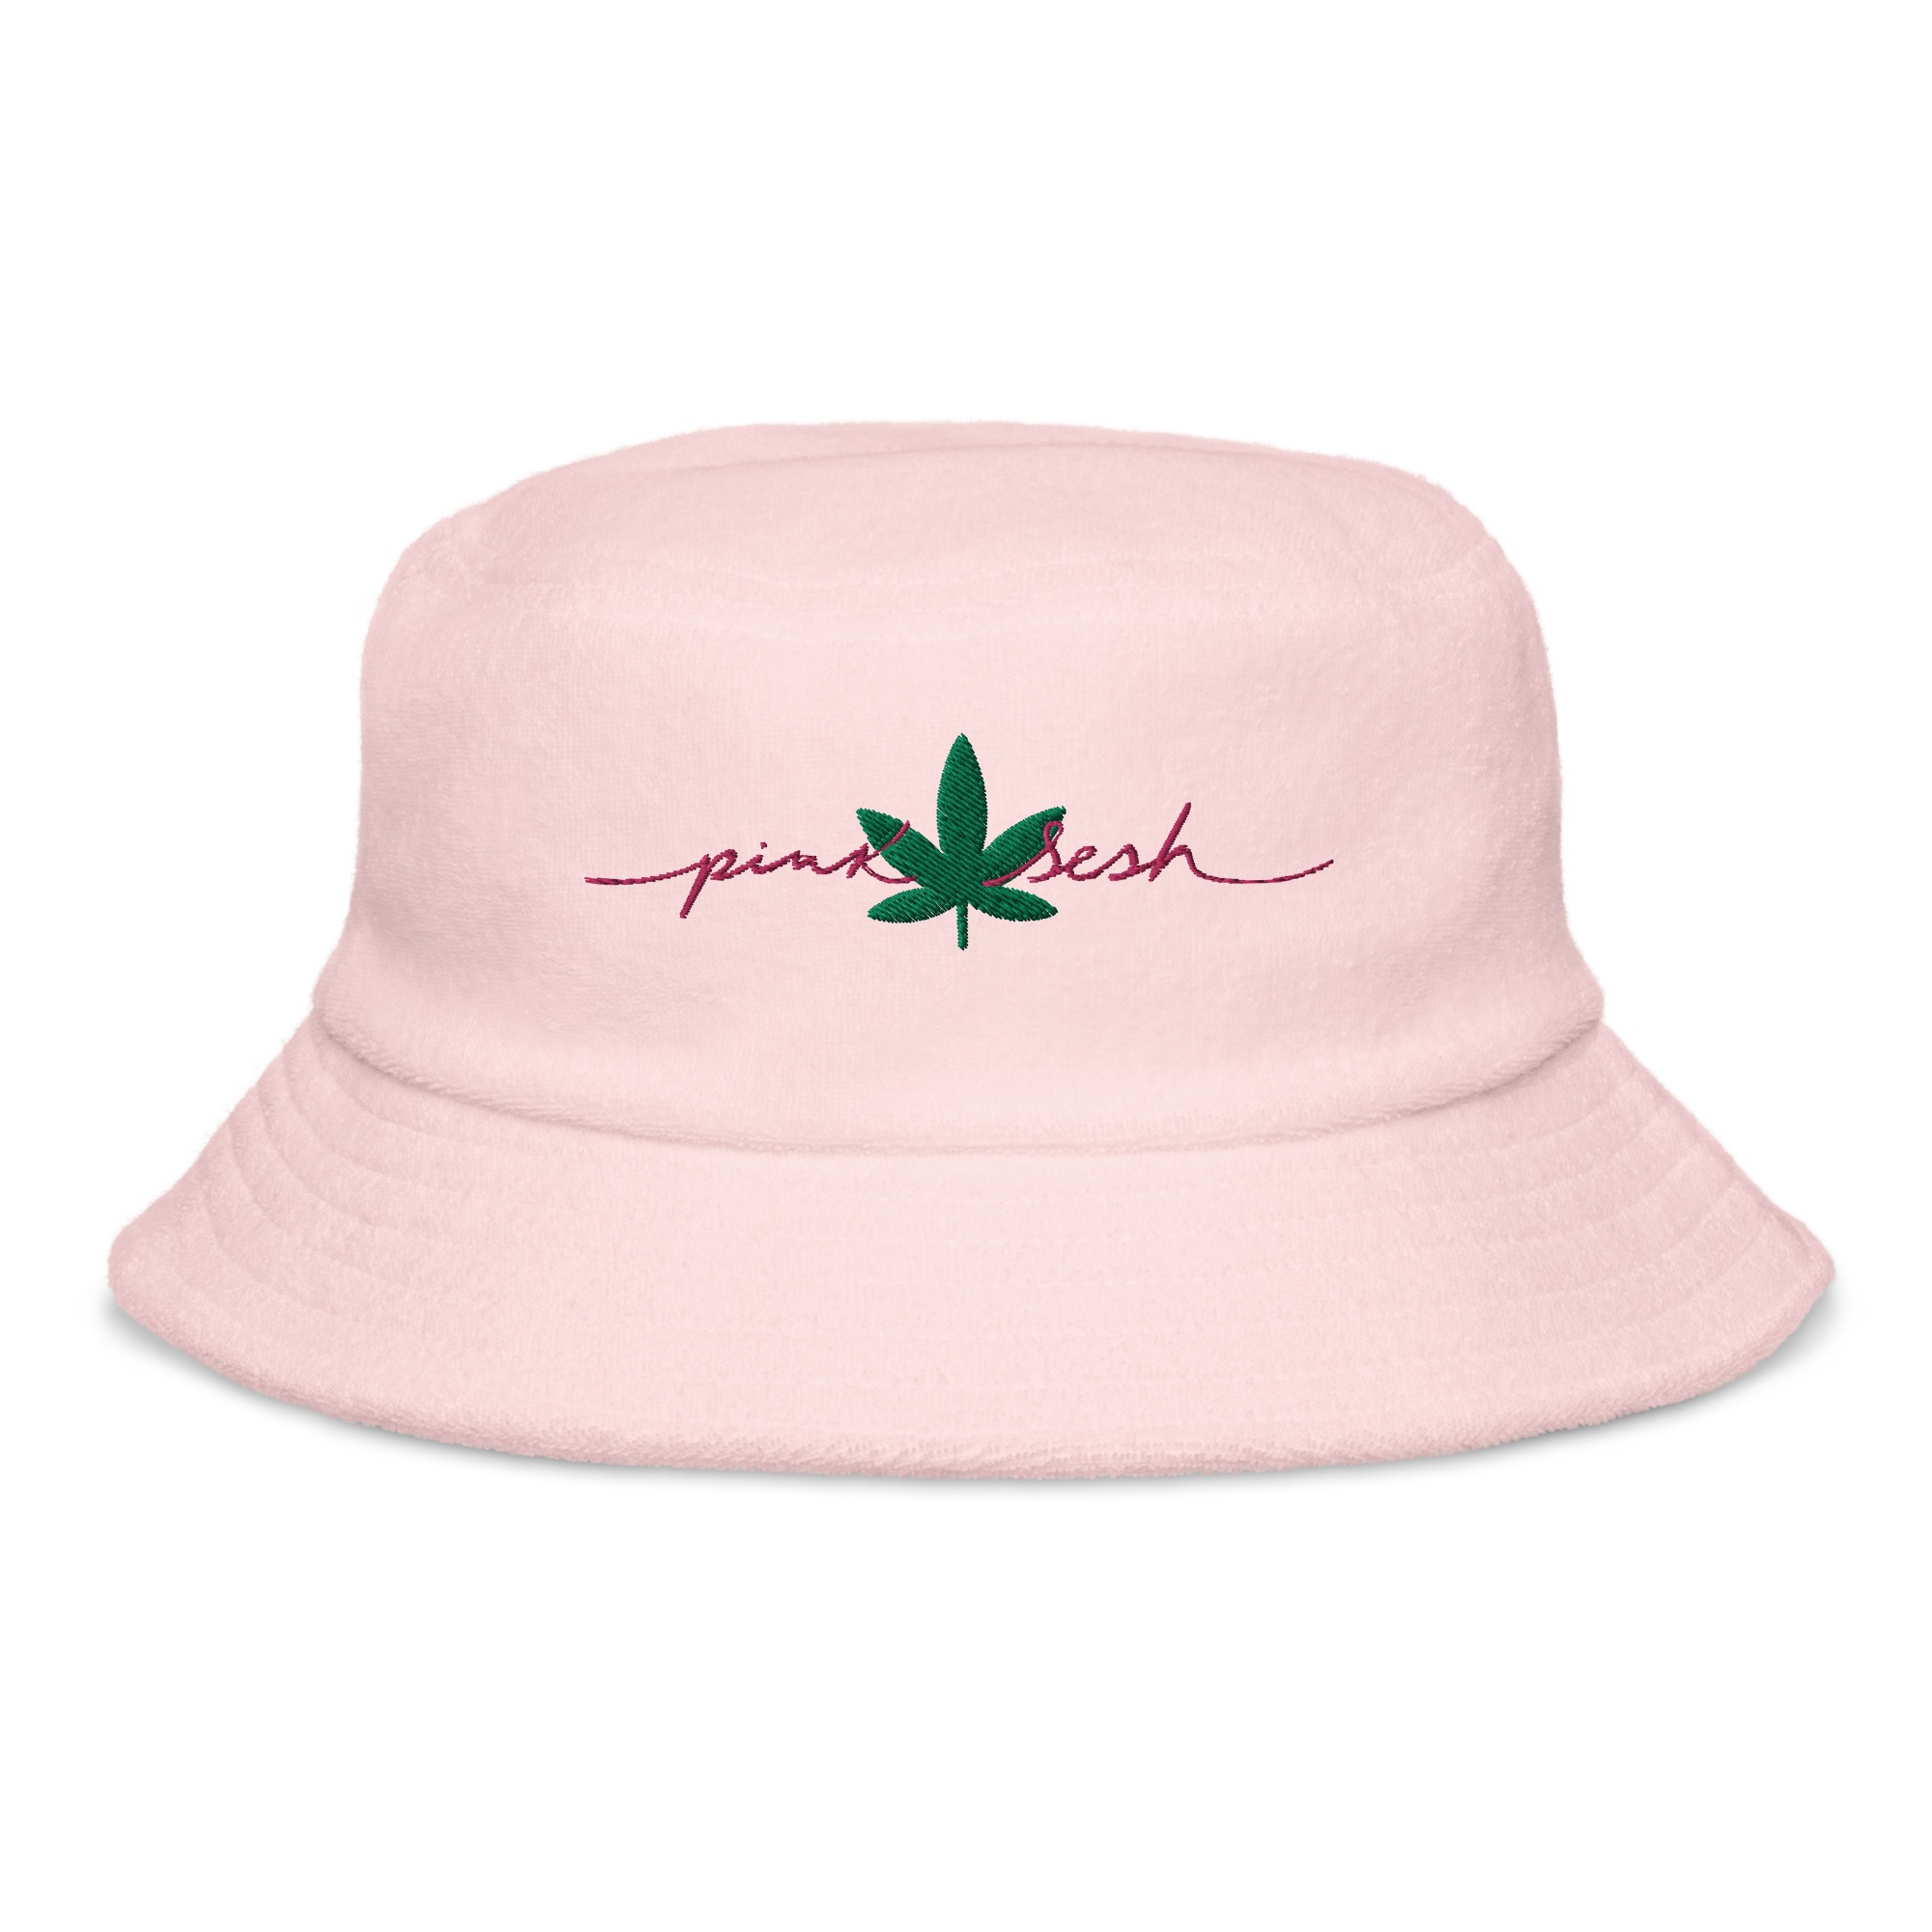 unstructured-terry-cloth-bucket-hat-light-pink-front-64dfaa46d8e86.jpg